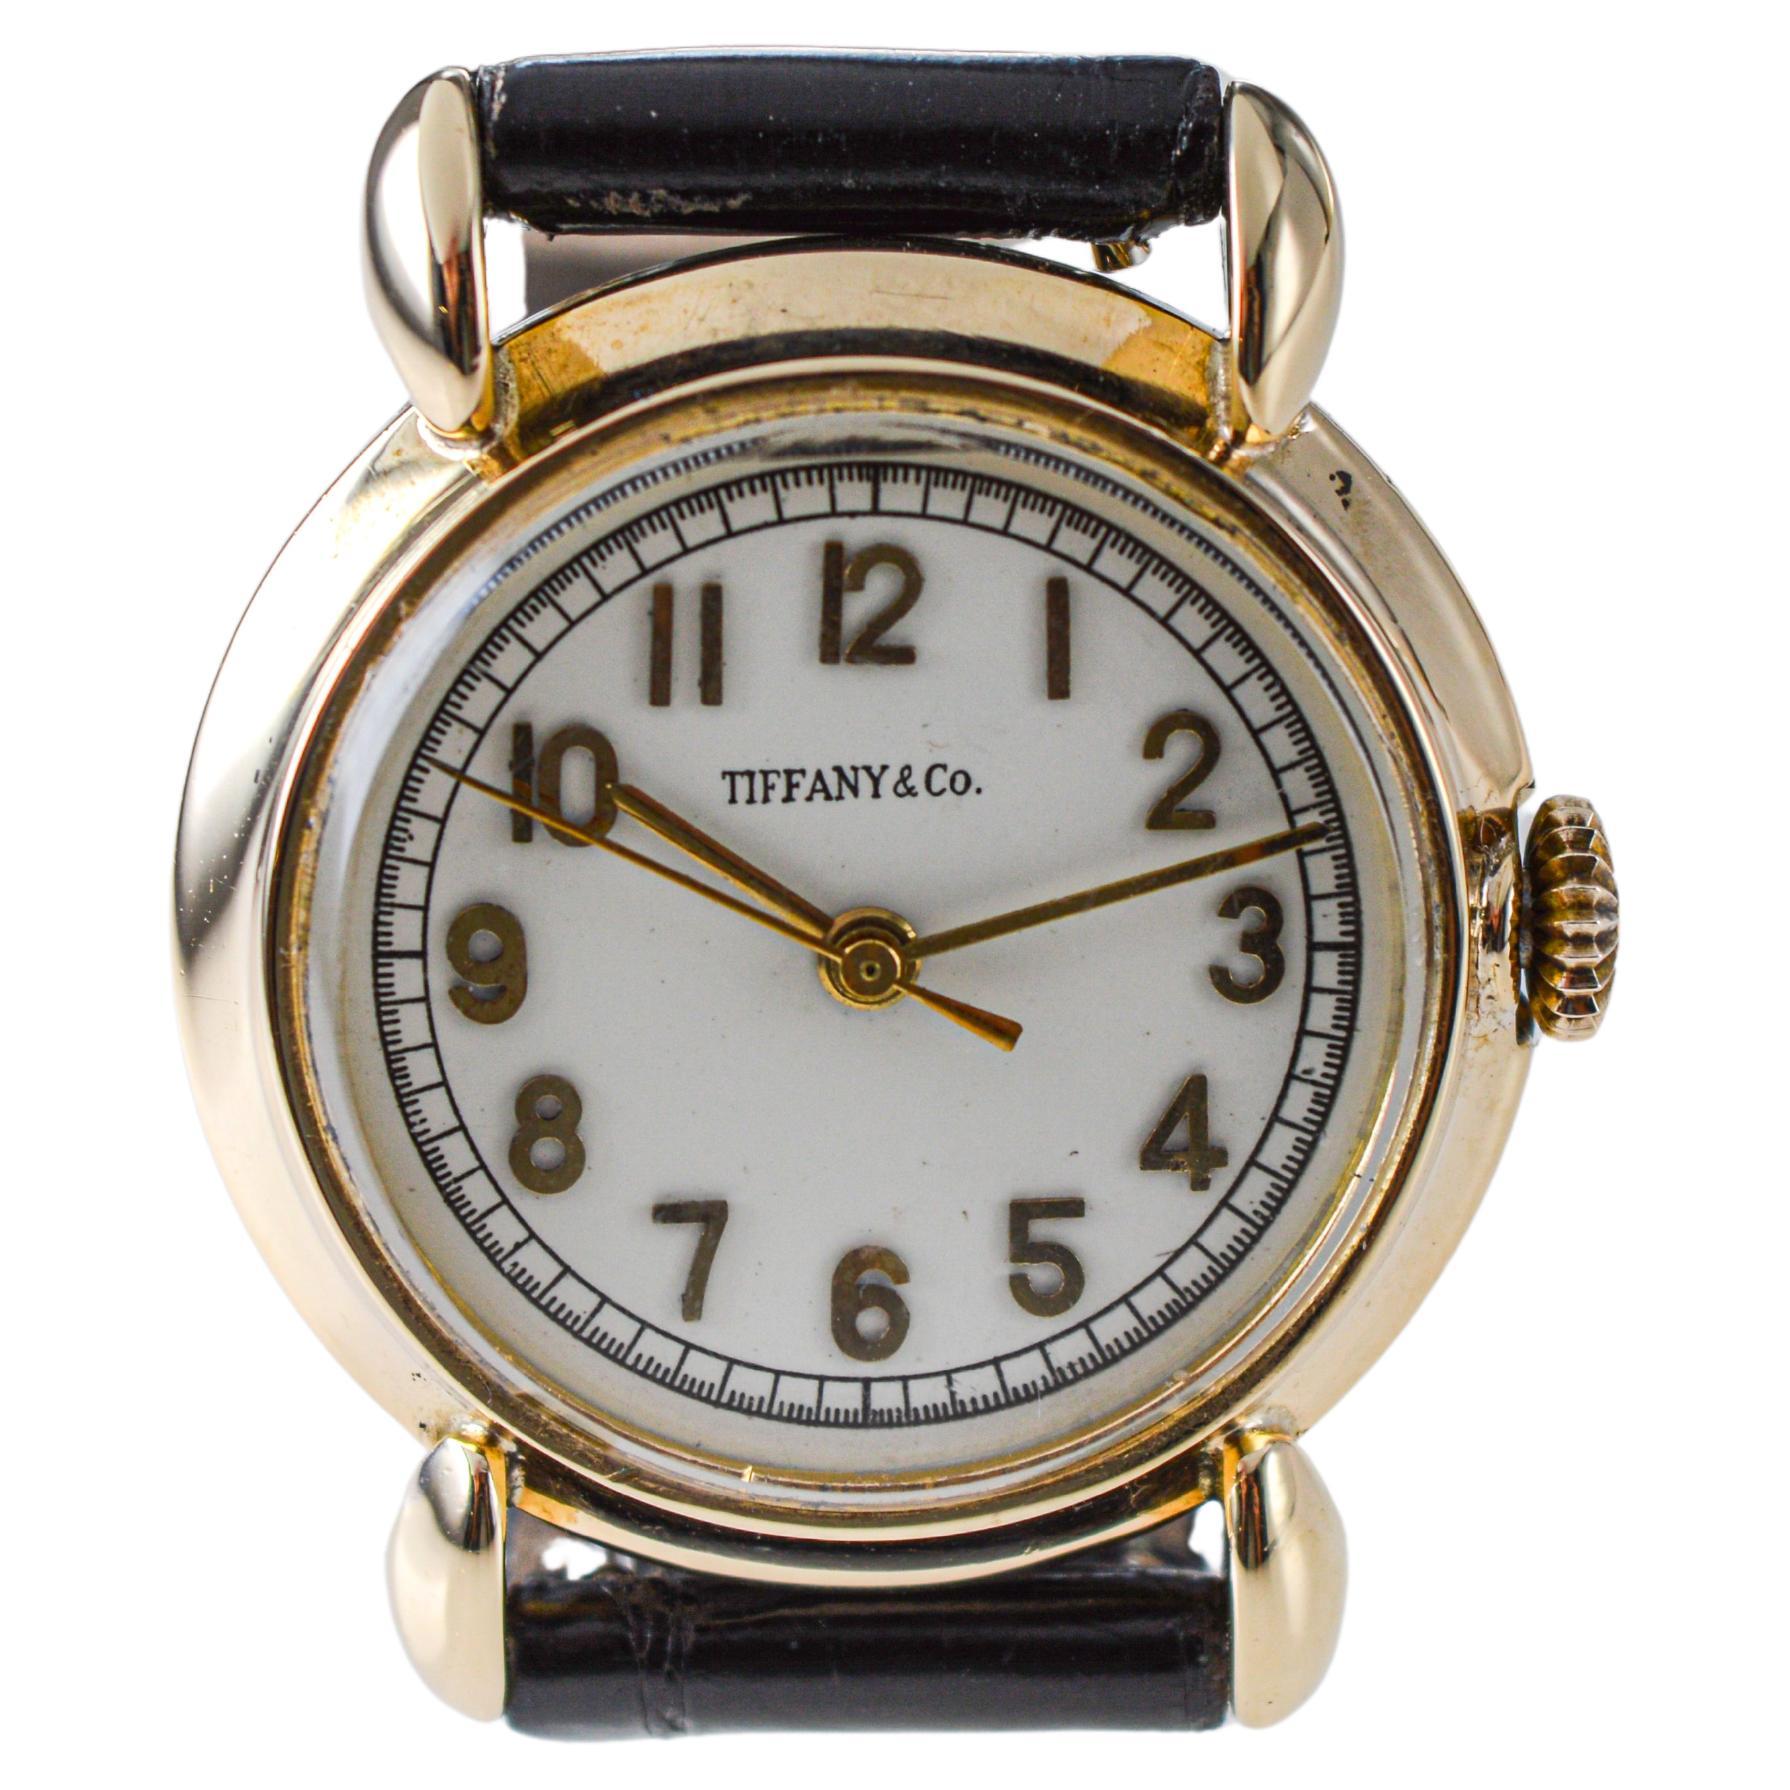 Tiffany & Co. by Schaffhausen International Watch Company Art Deco Style Watch For Sale 7